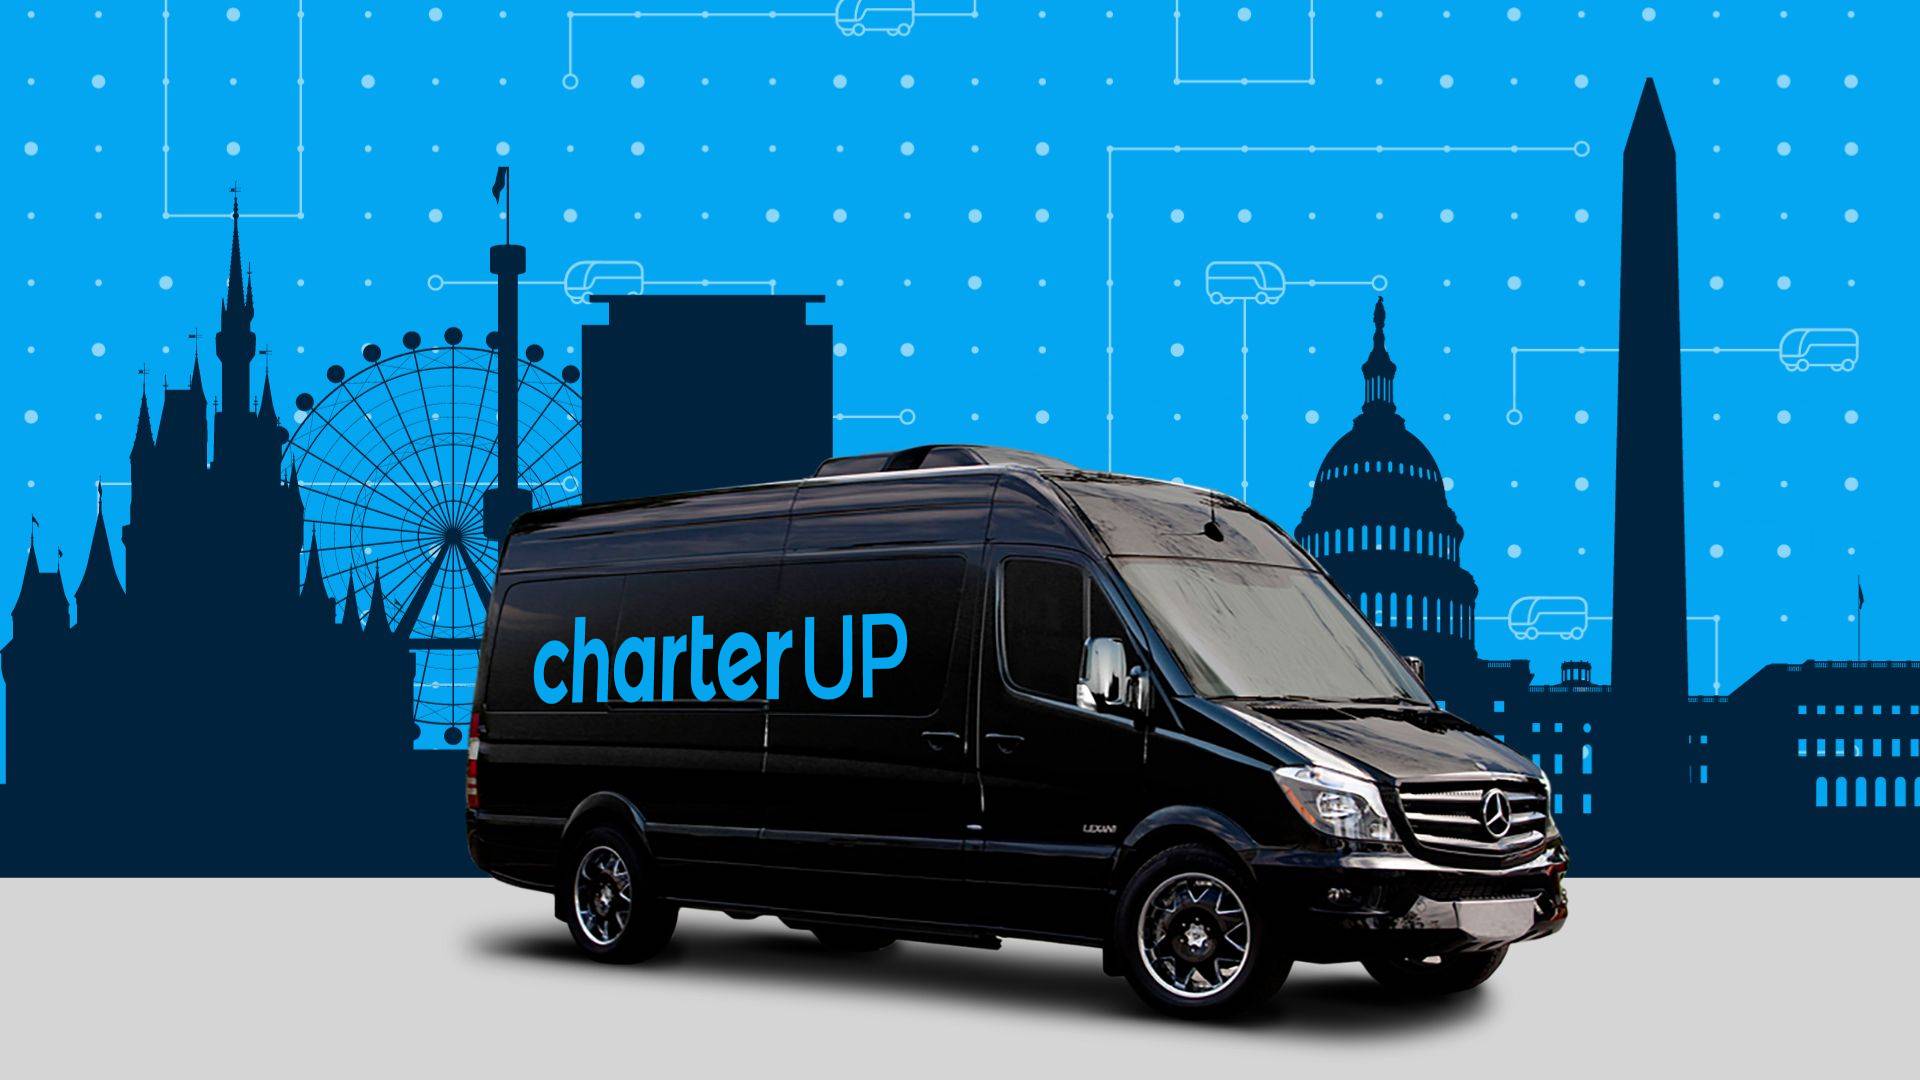 CharterUP expands luxury sprinter van rental service to Washington D.C. and Orlando